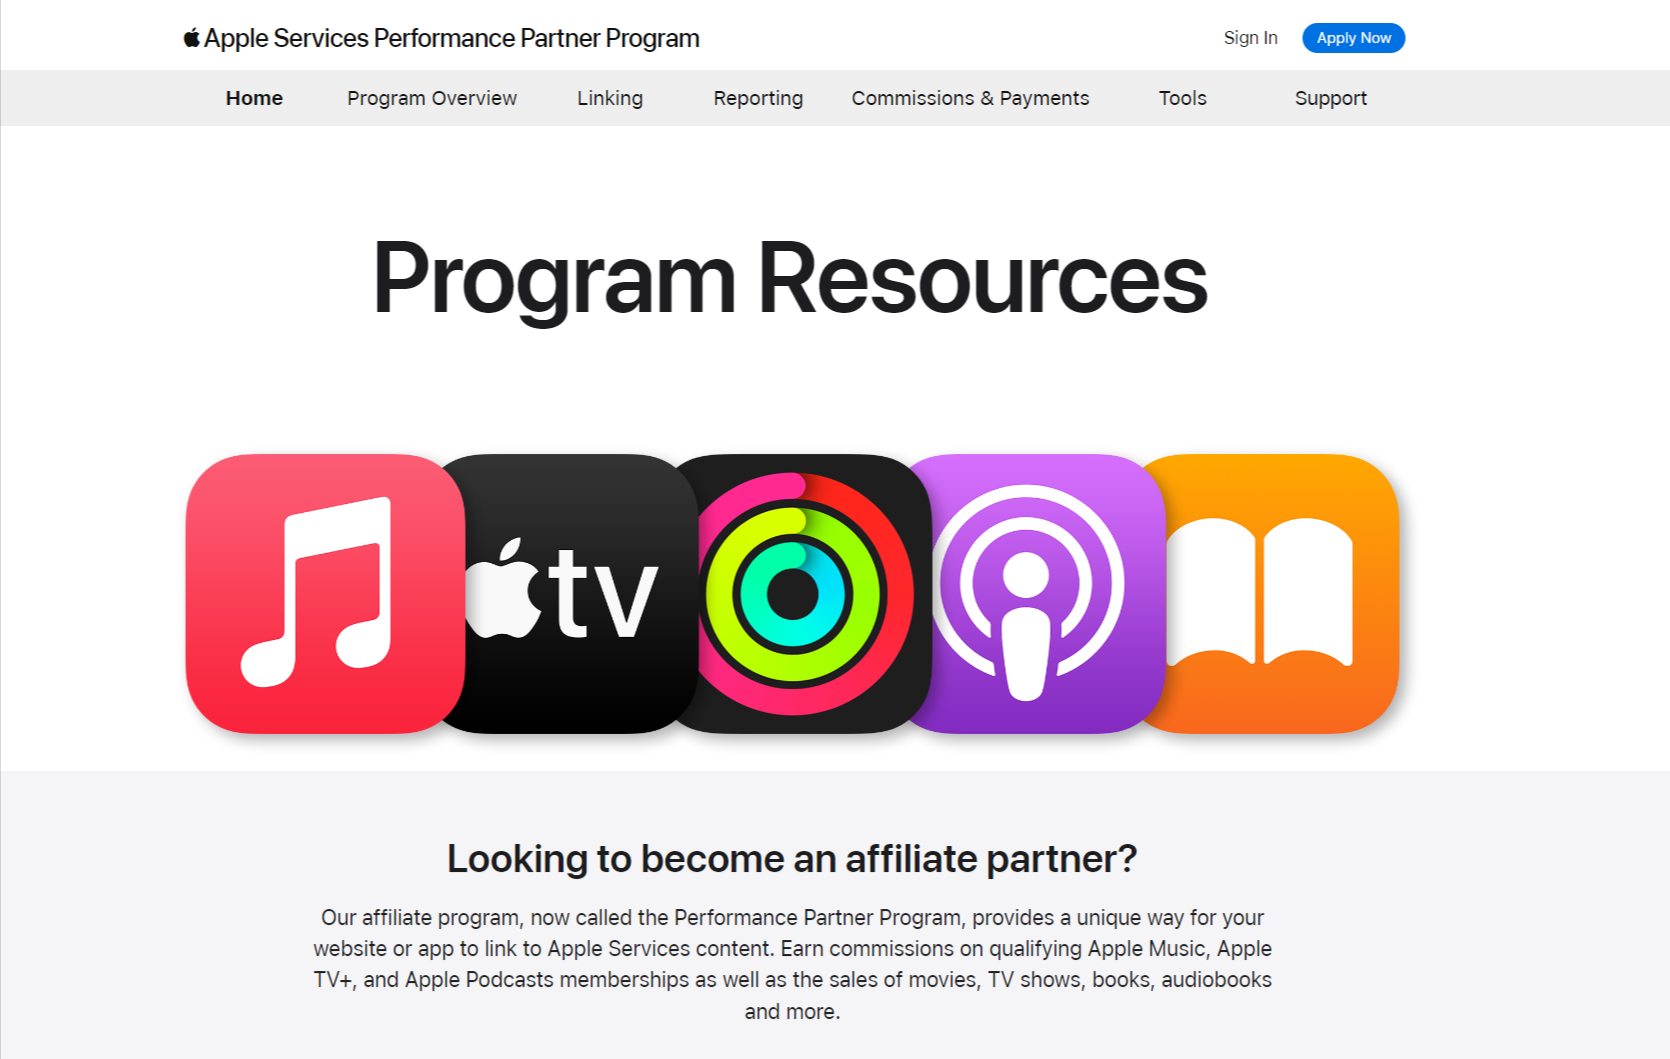 Apple's affiliate program